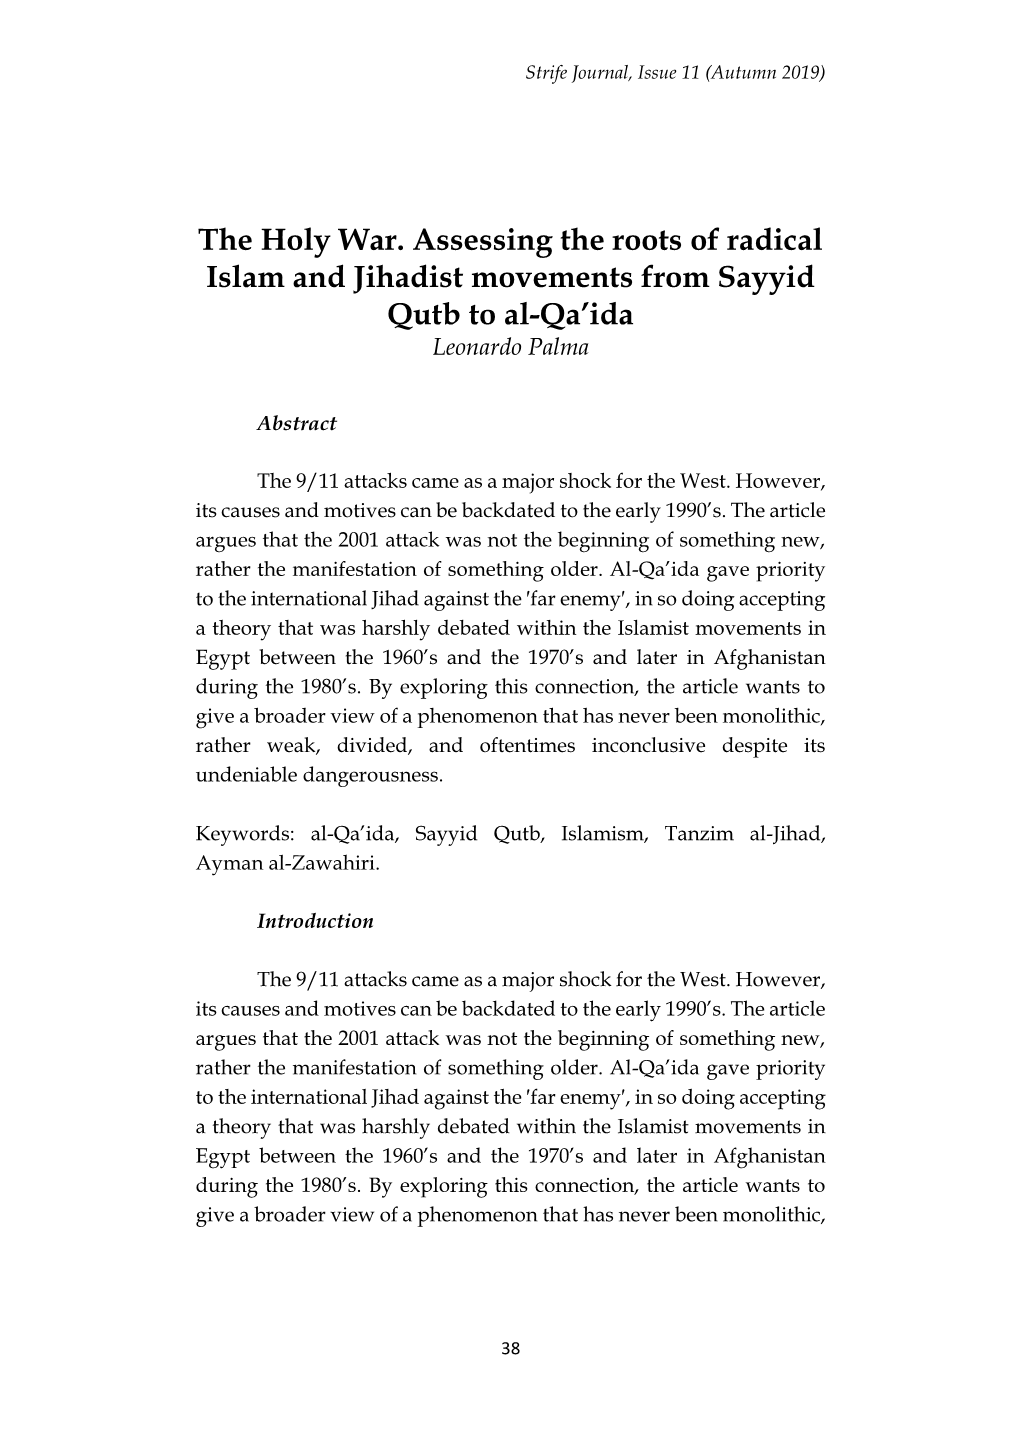 The Holy War. Assessing the Roots of Radical Islam and Jihadist Movements from Sayyid Qutb to Al-Qa’Ida Leonardo Palma